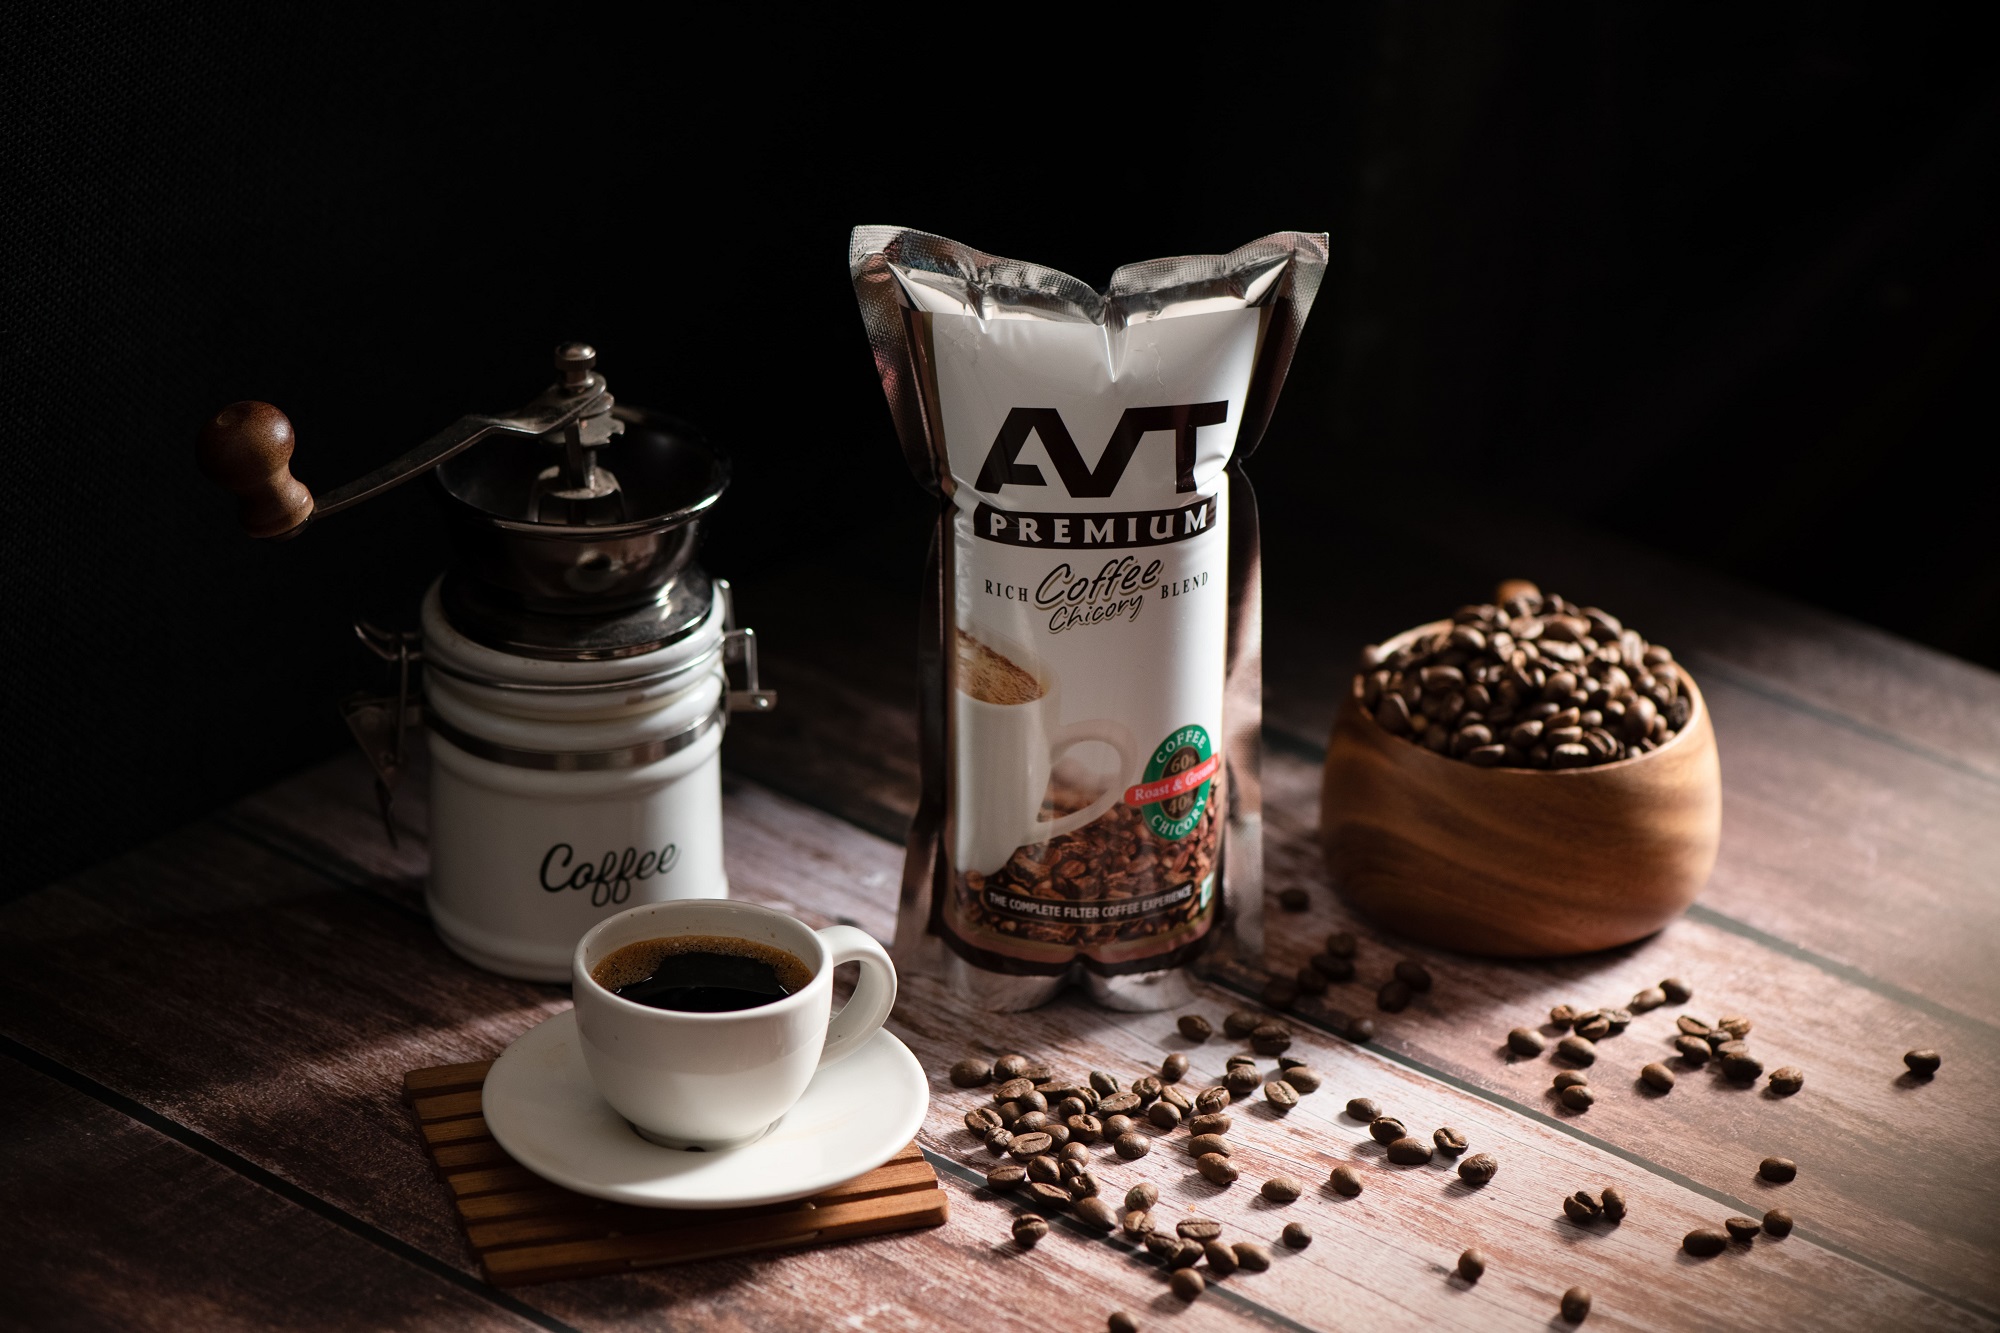 Avt Premium Coffee Powder